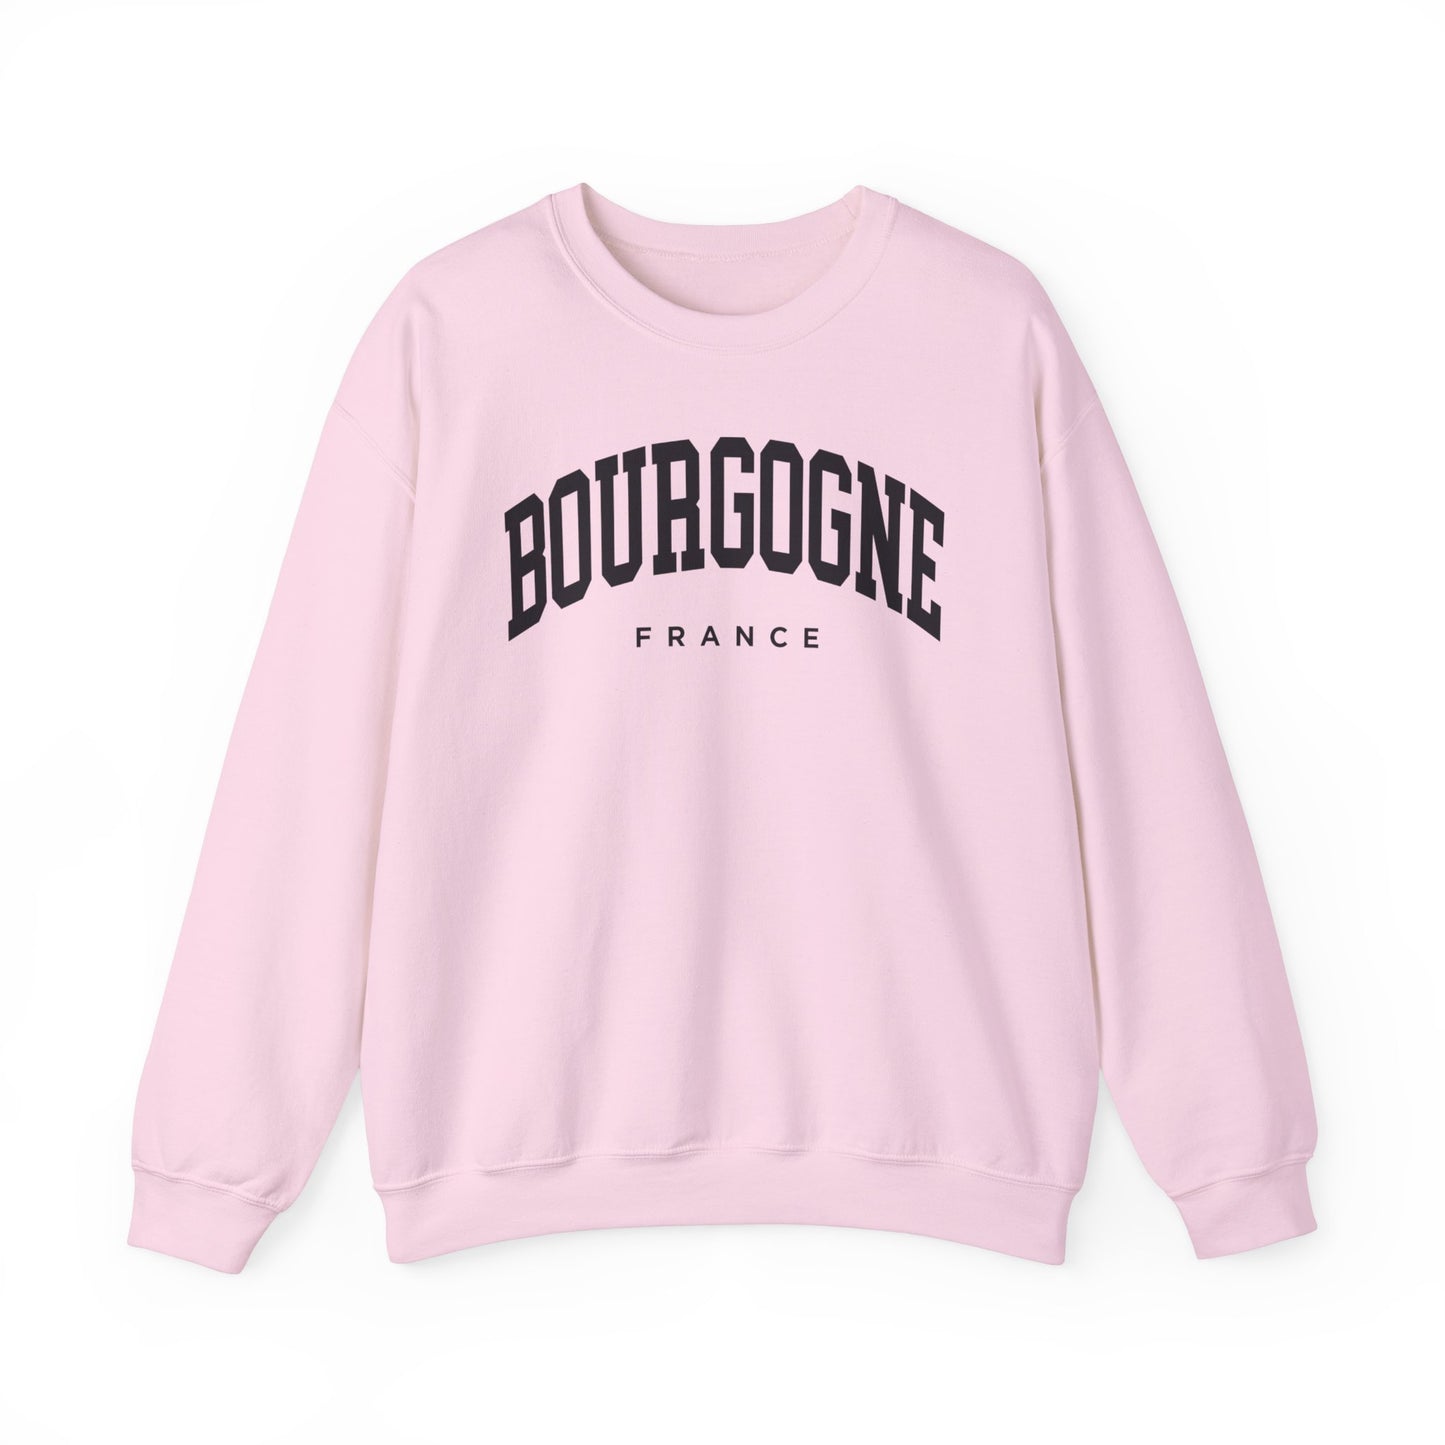 Burgundy France Sweatshirt